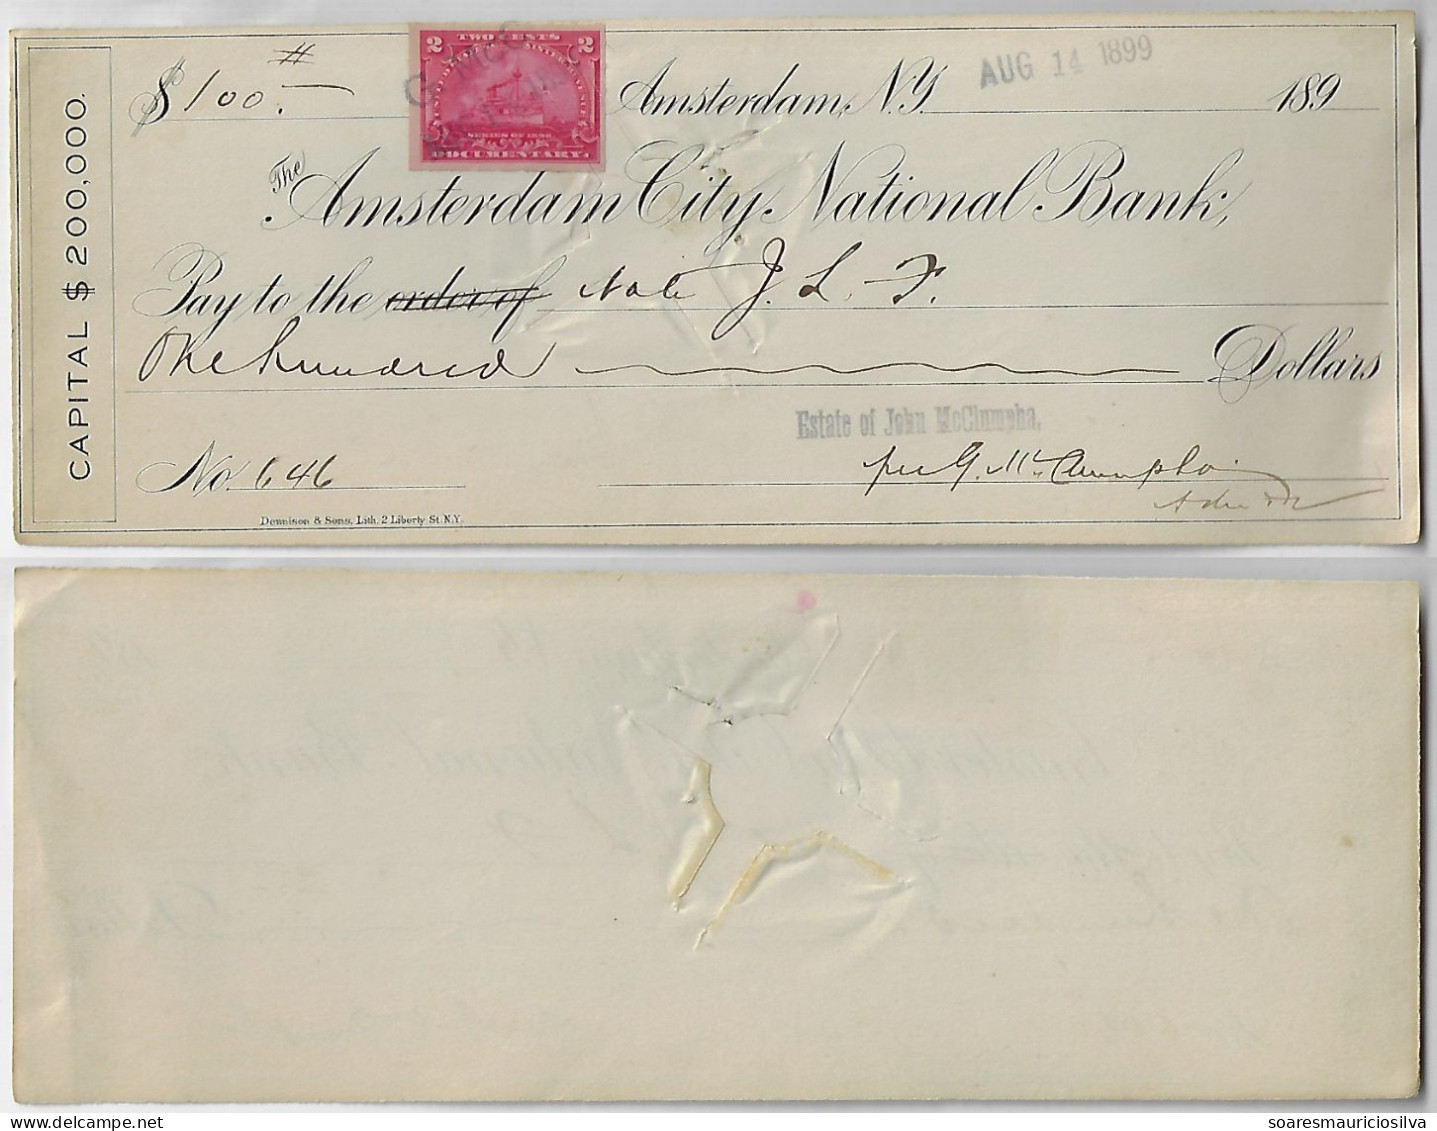 USA 1899 Amsterdam City National Bank Check Estate Of John Mcclumpha Postal Revenue Stamp 2 Cents Documentary - Chèques & Chèques De Voyage